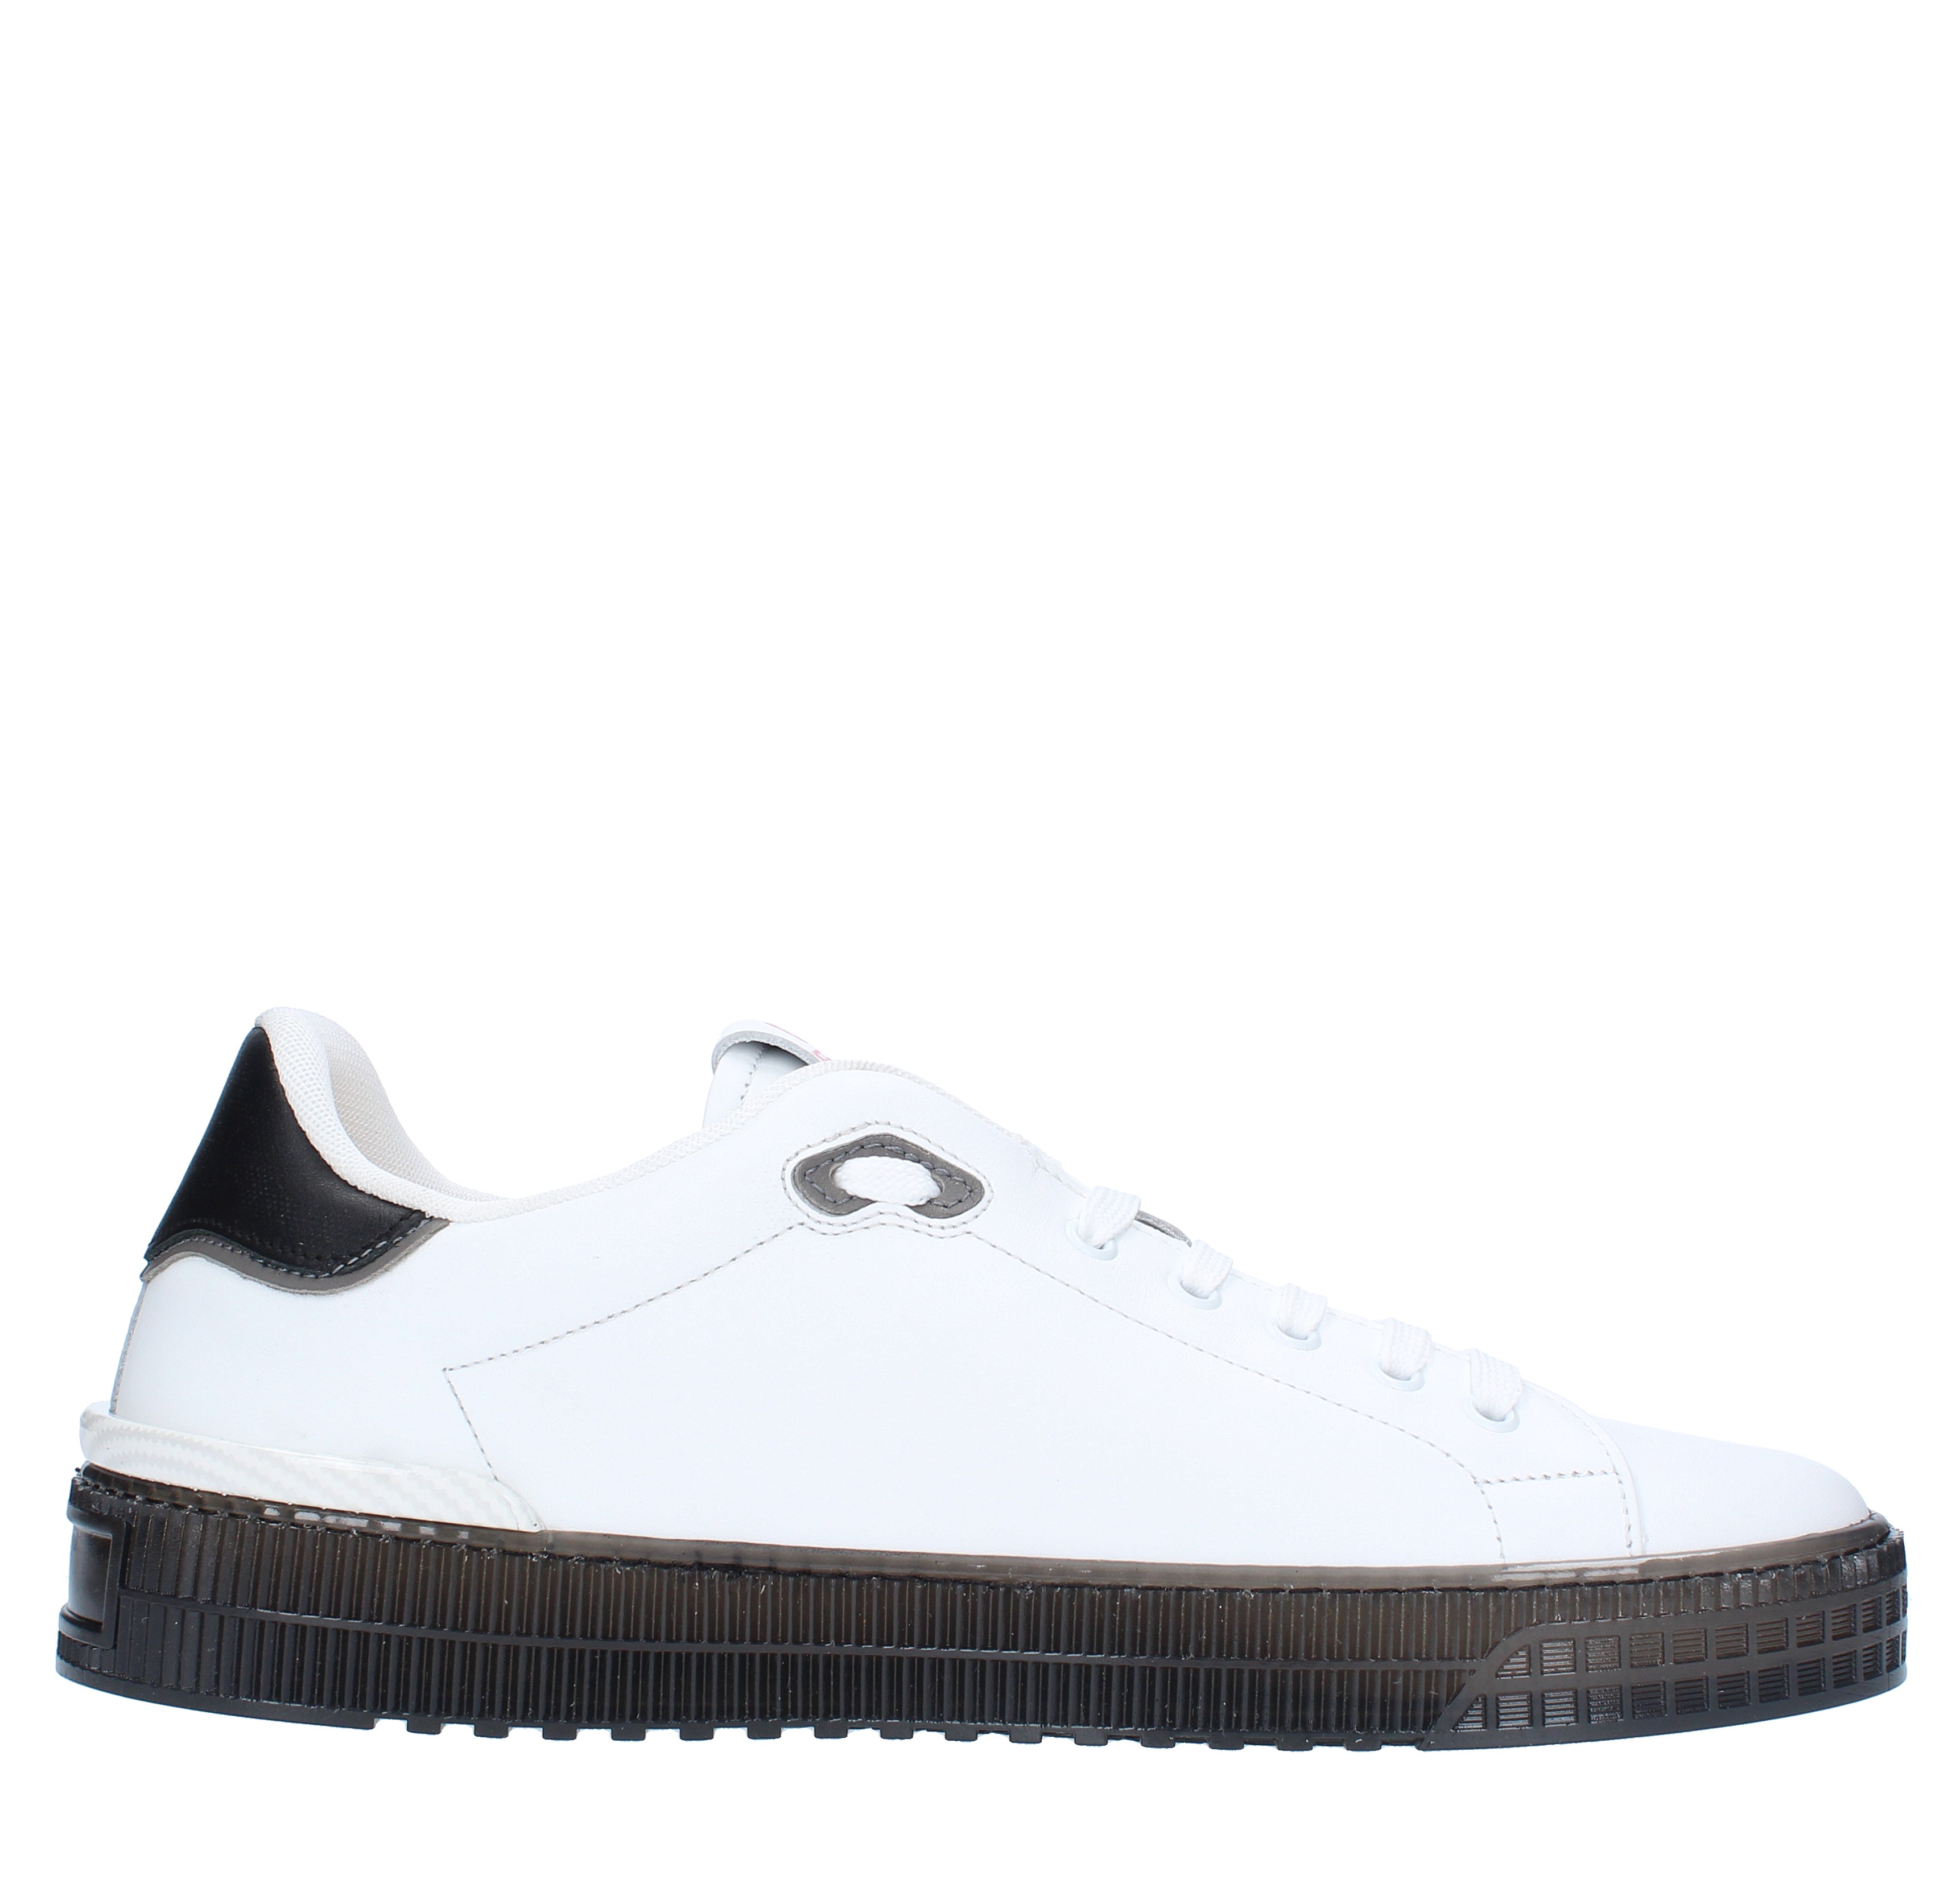 Sneakers in pelle OFF PL>Y | SLOW 1 UBIANCO